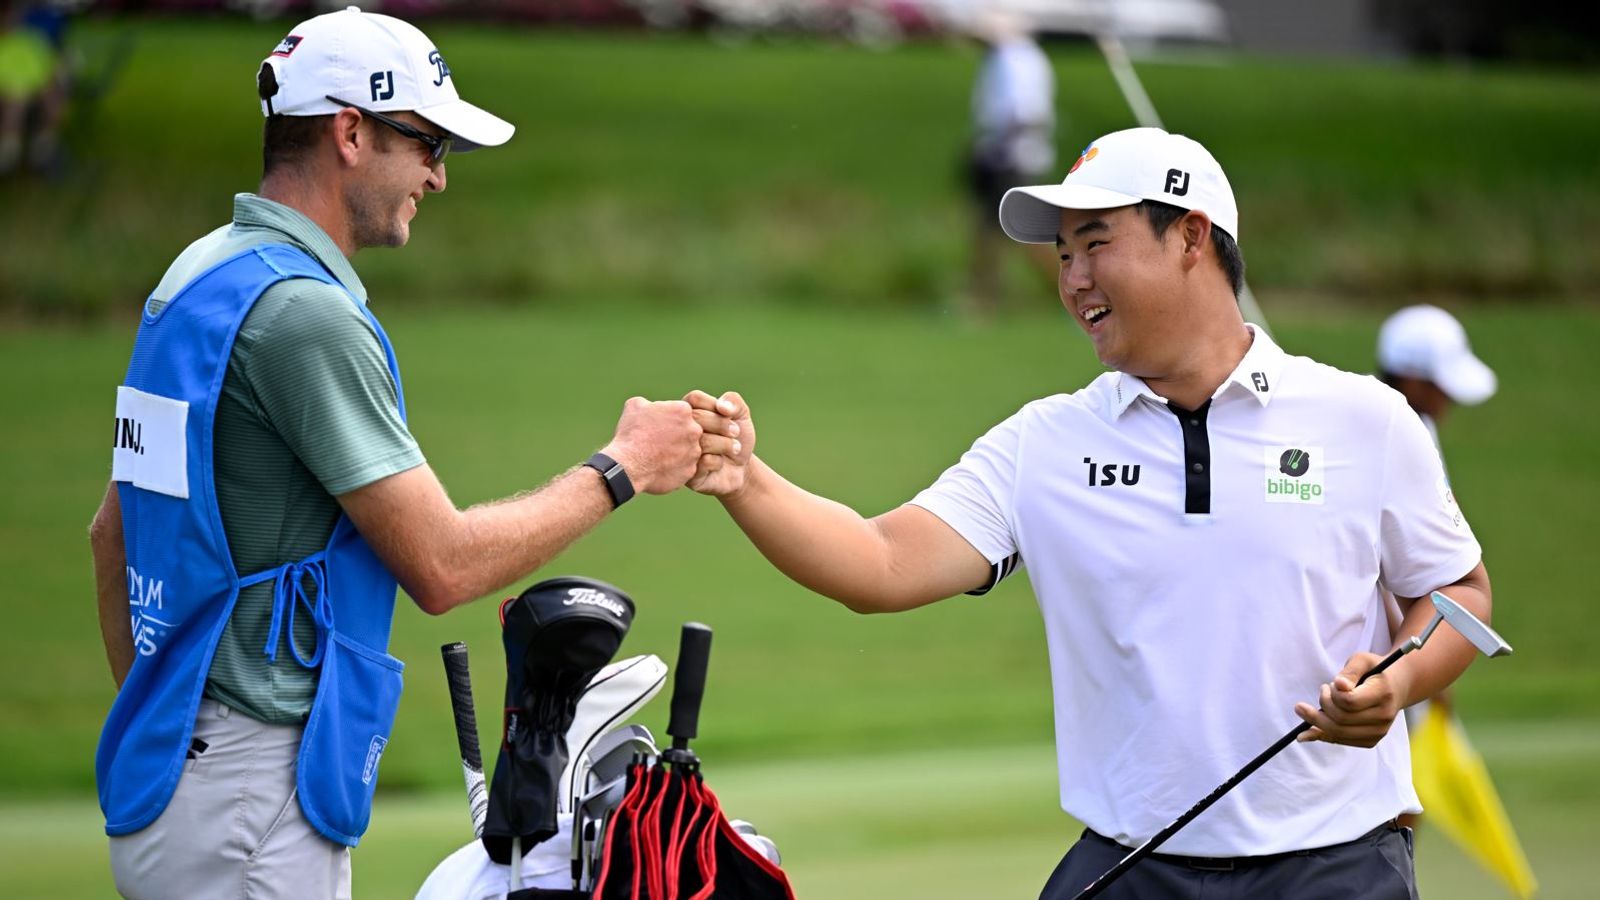 Wyndham Championship: Joohyung Kim claims maiden PGA Tour title after threatening ’59 round’